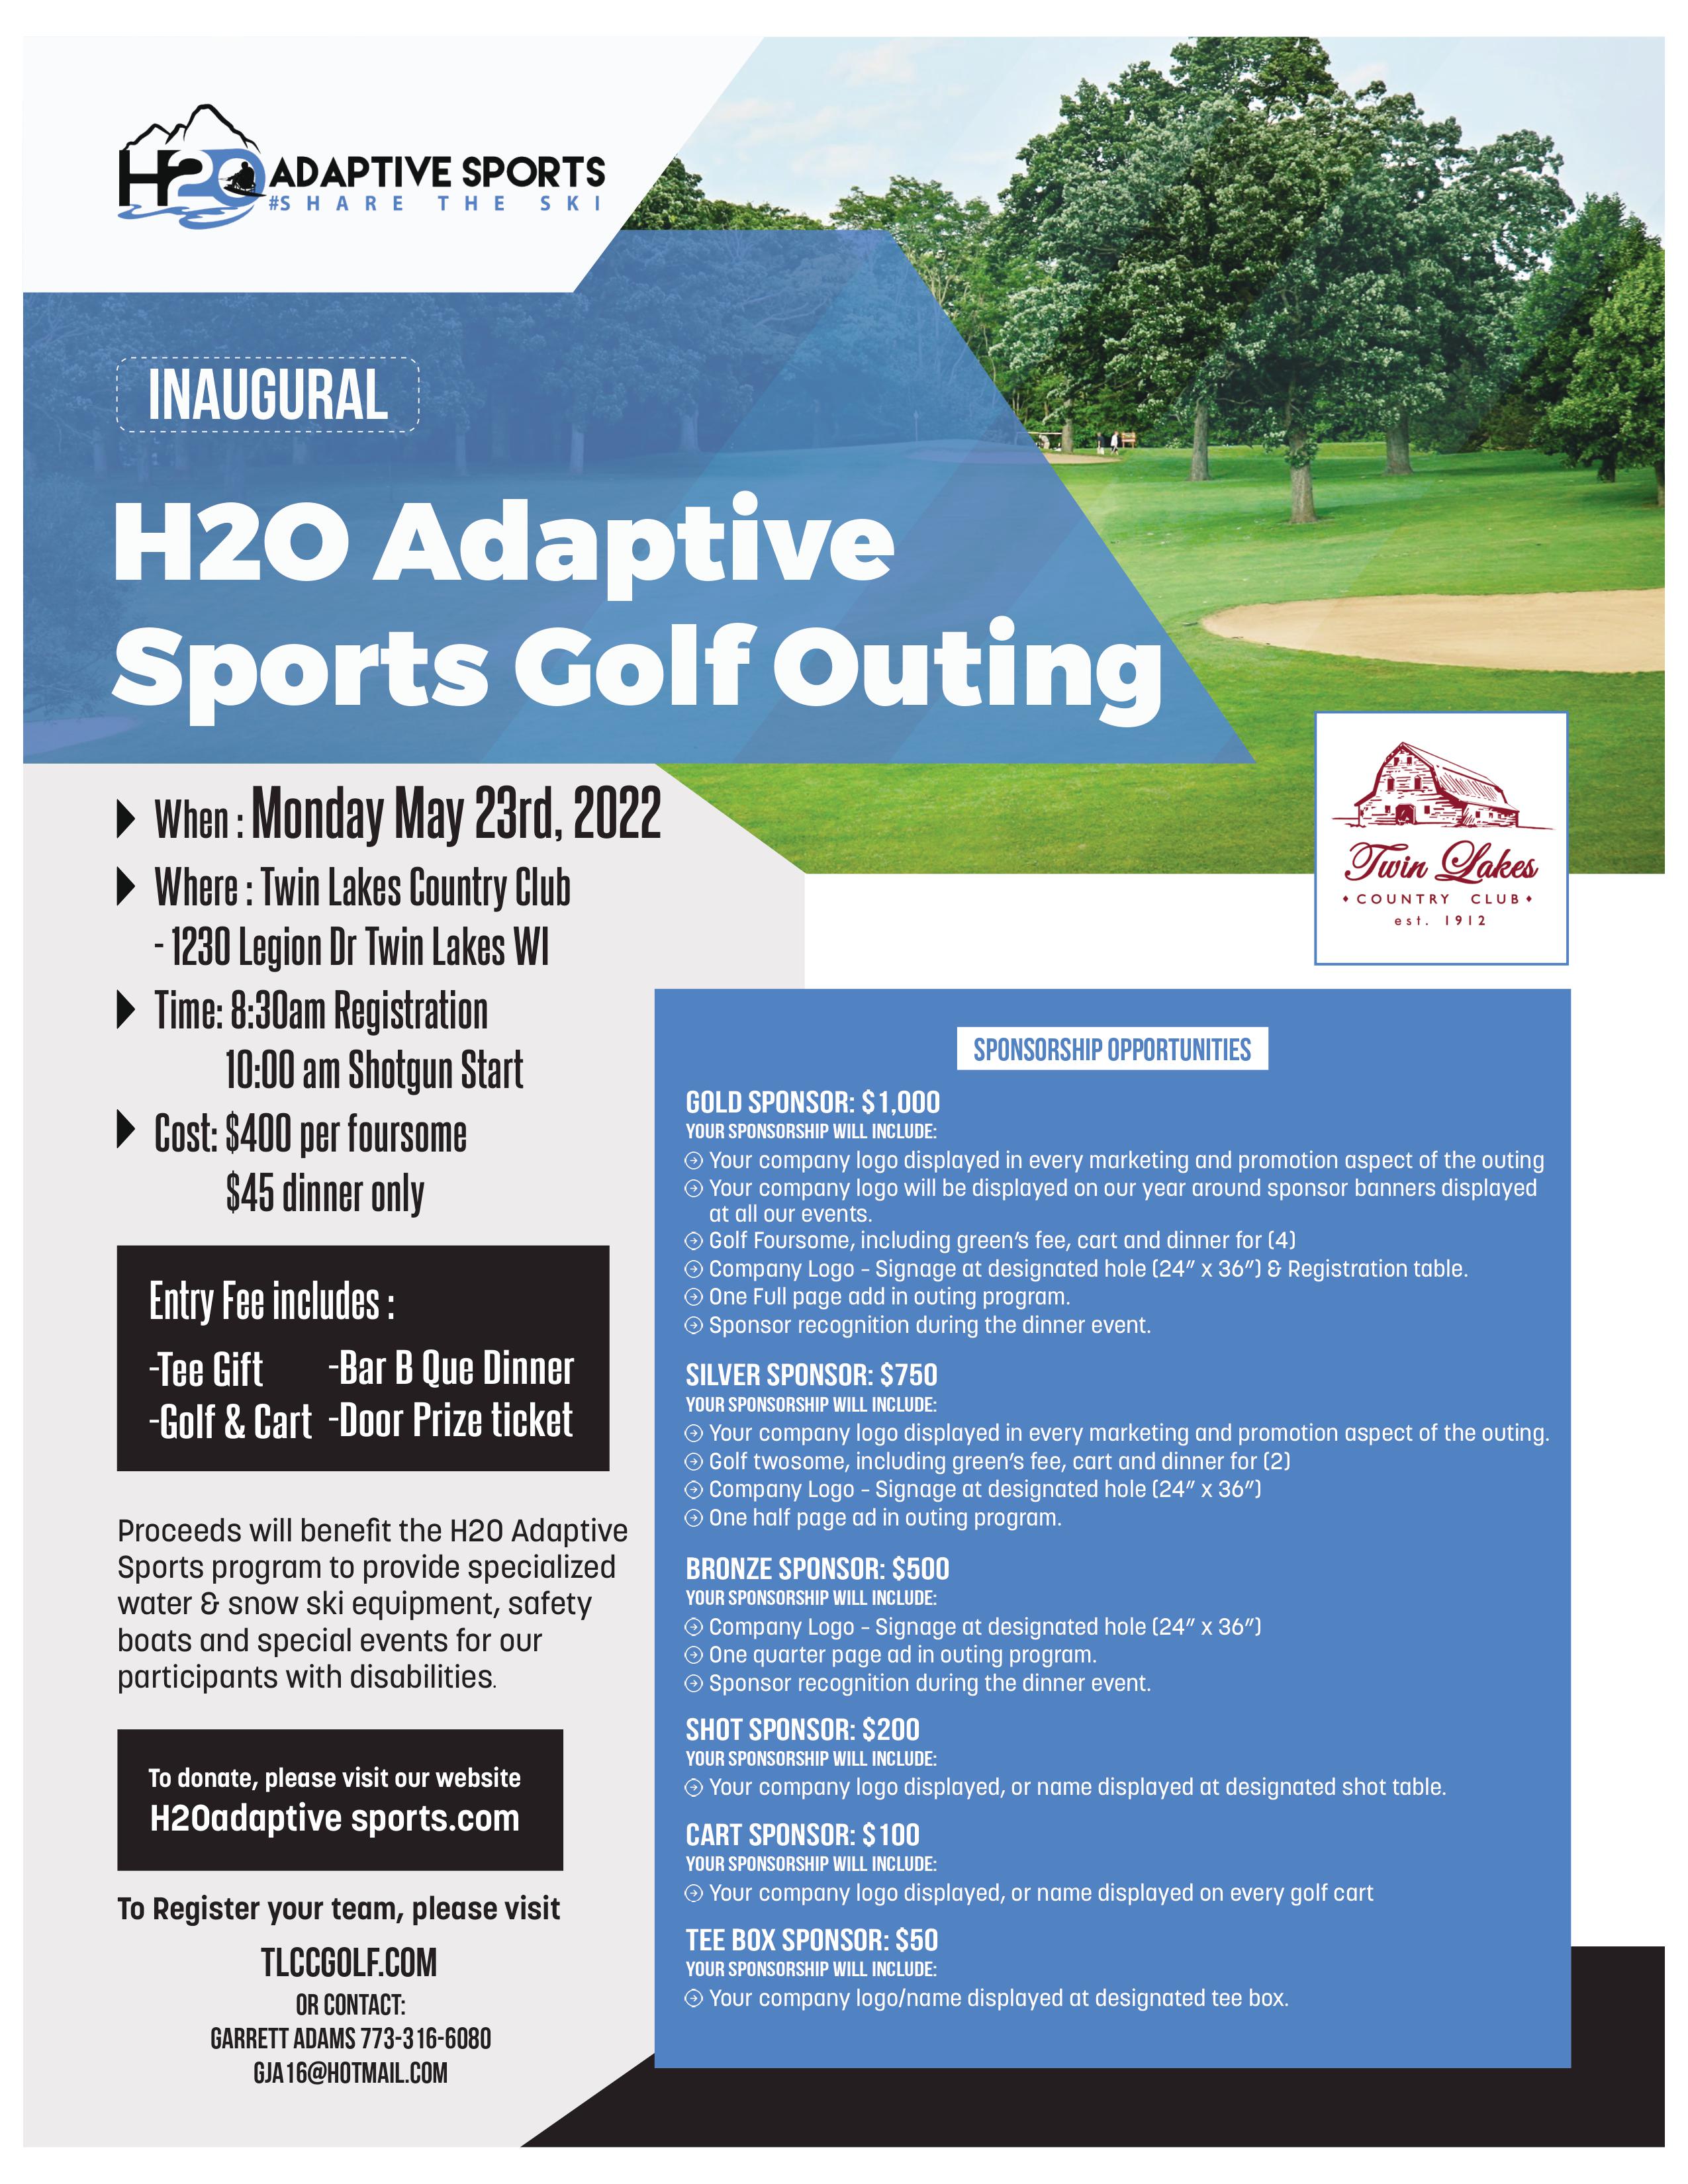 h2o adaptive sports golf outing